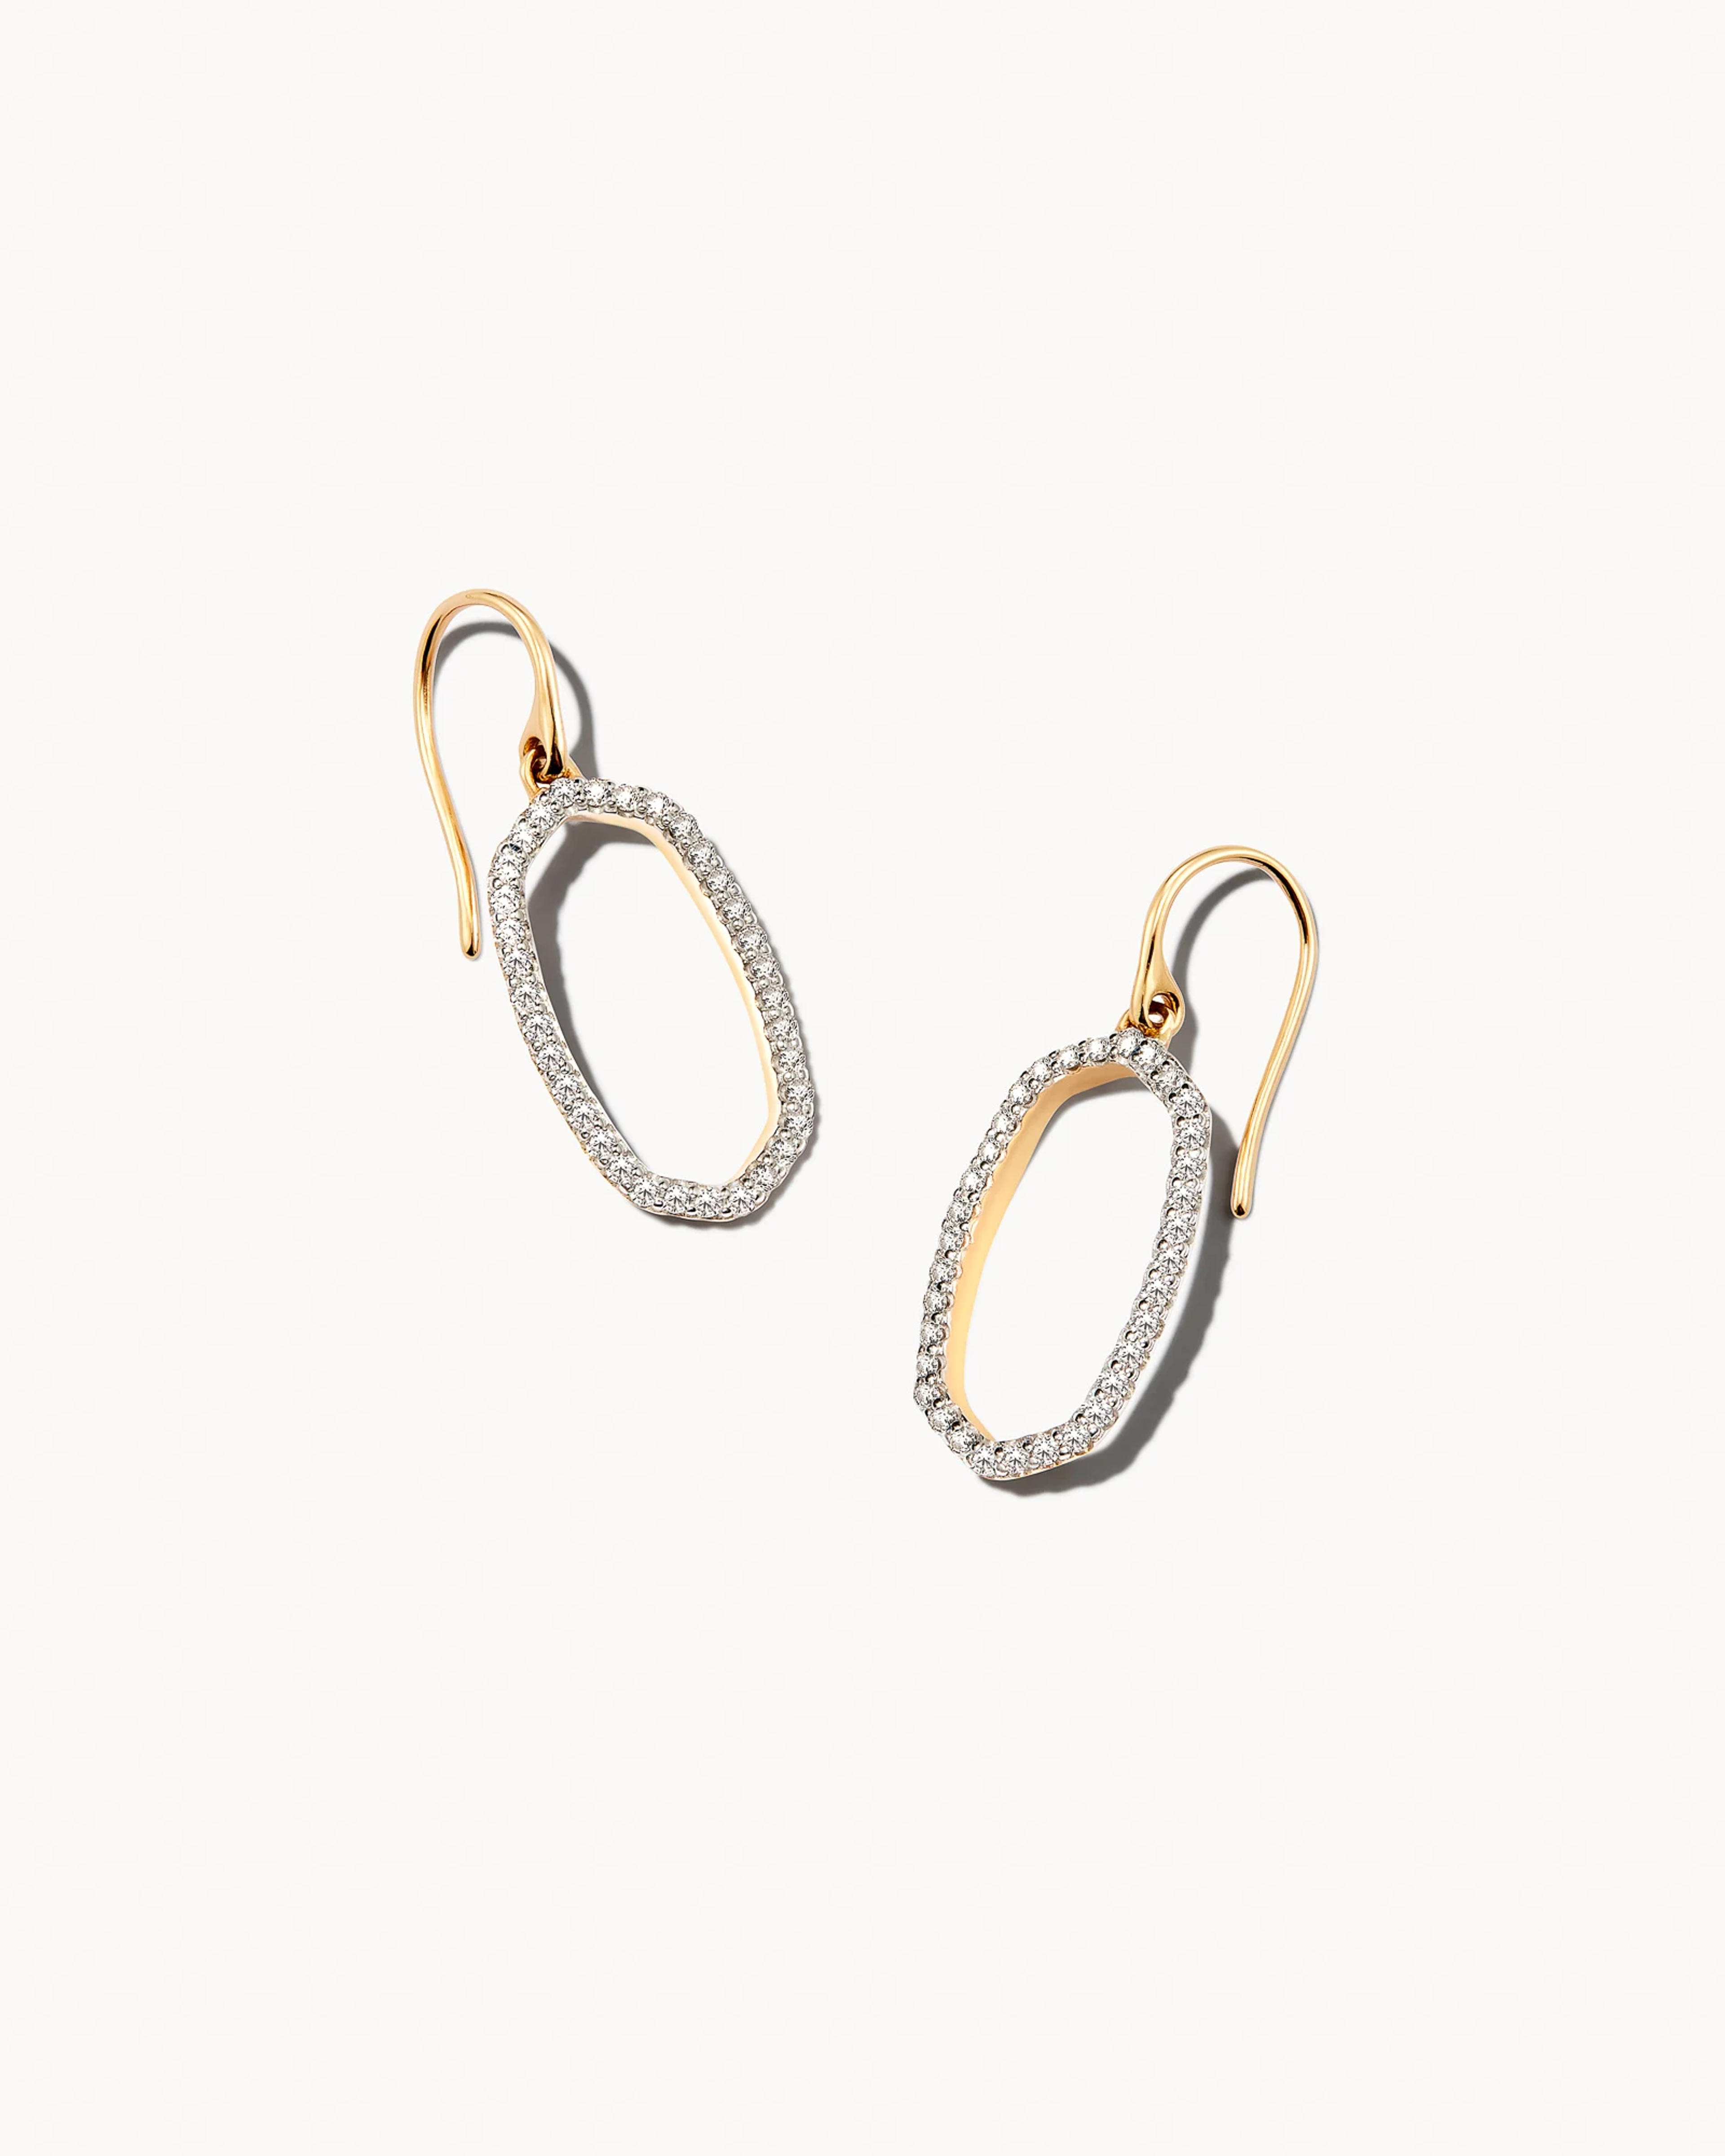 Lee 14k Yellow Gold Open Frame Earrings in White Diamond | Kendra Scott